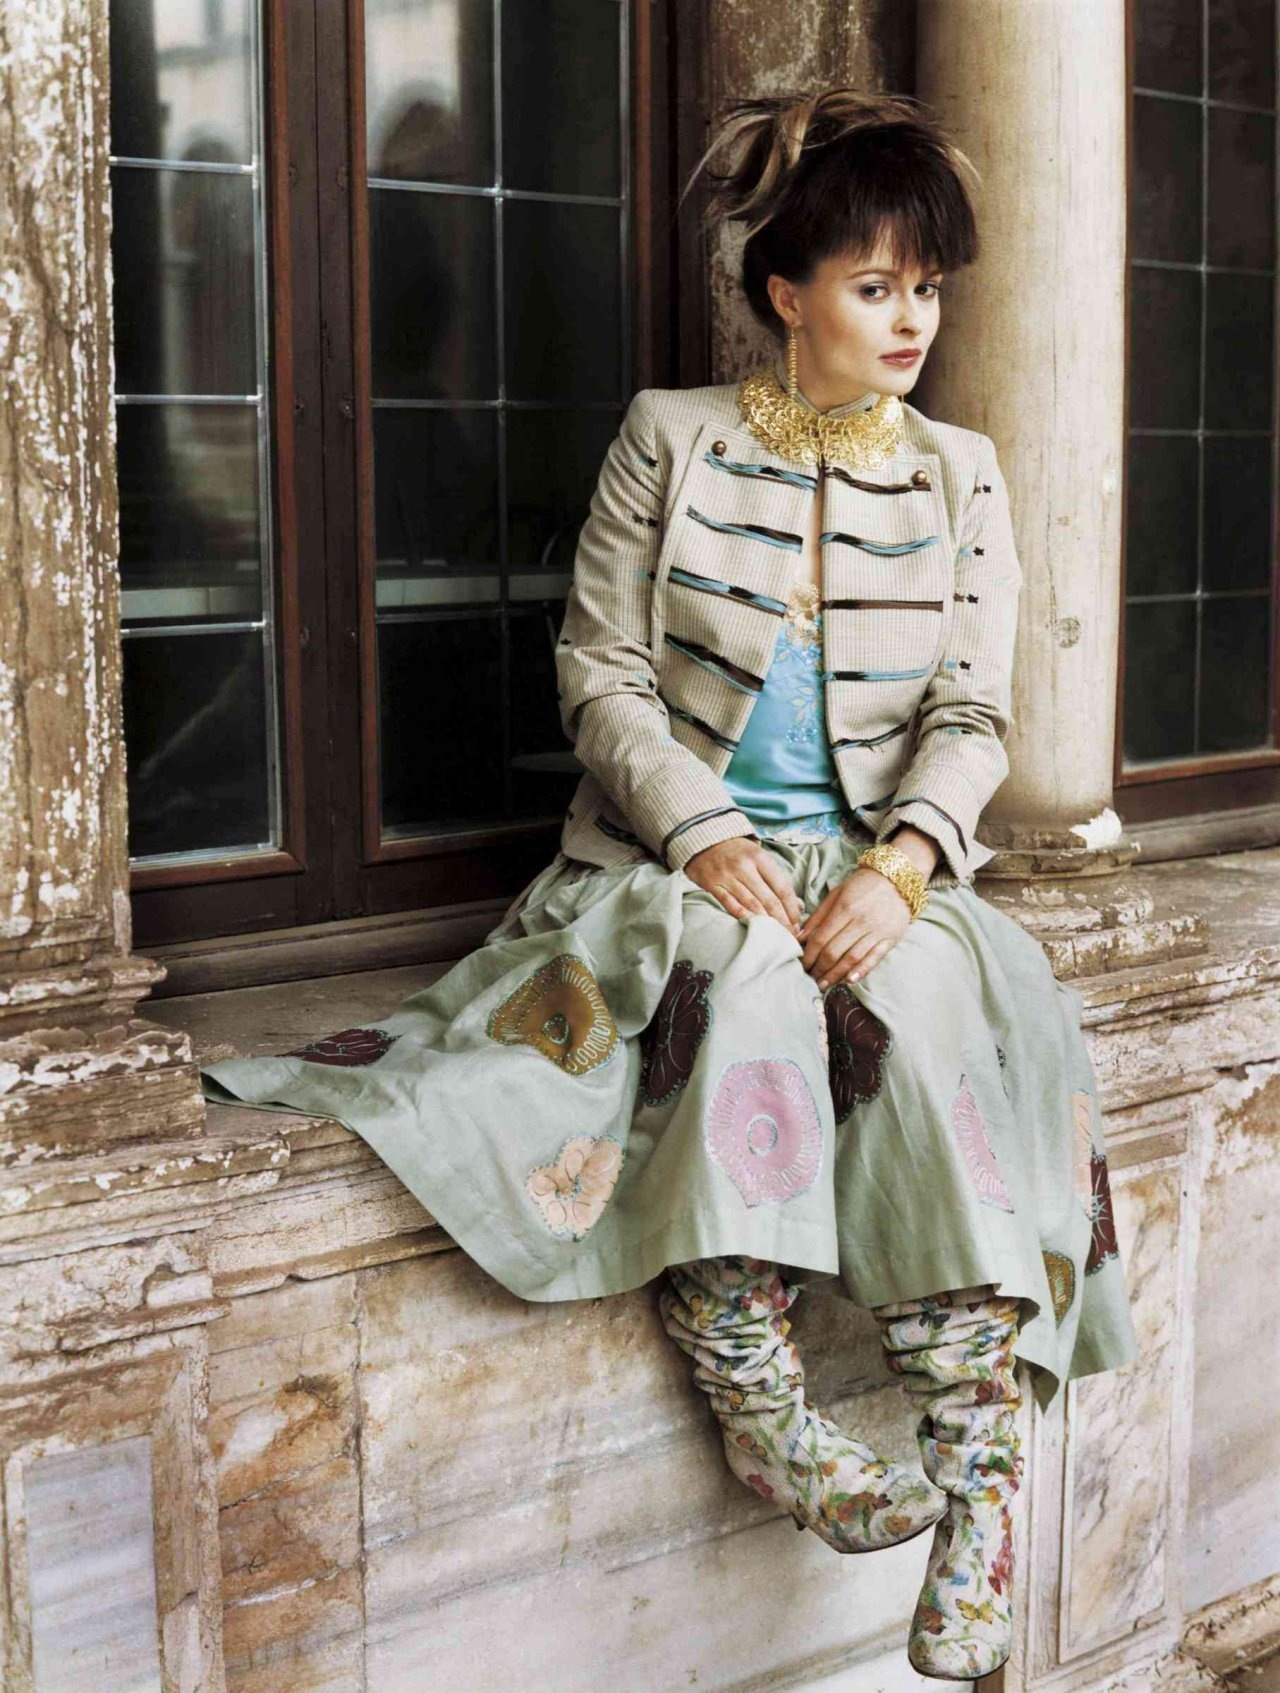 Helena Bonham Carter leaked wallpapers